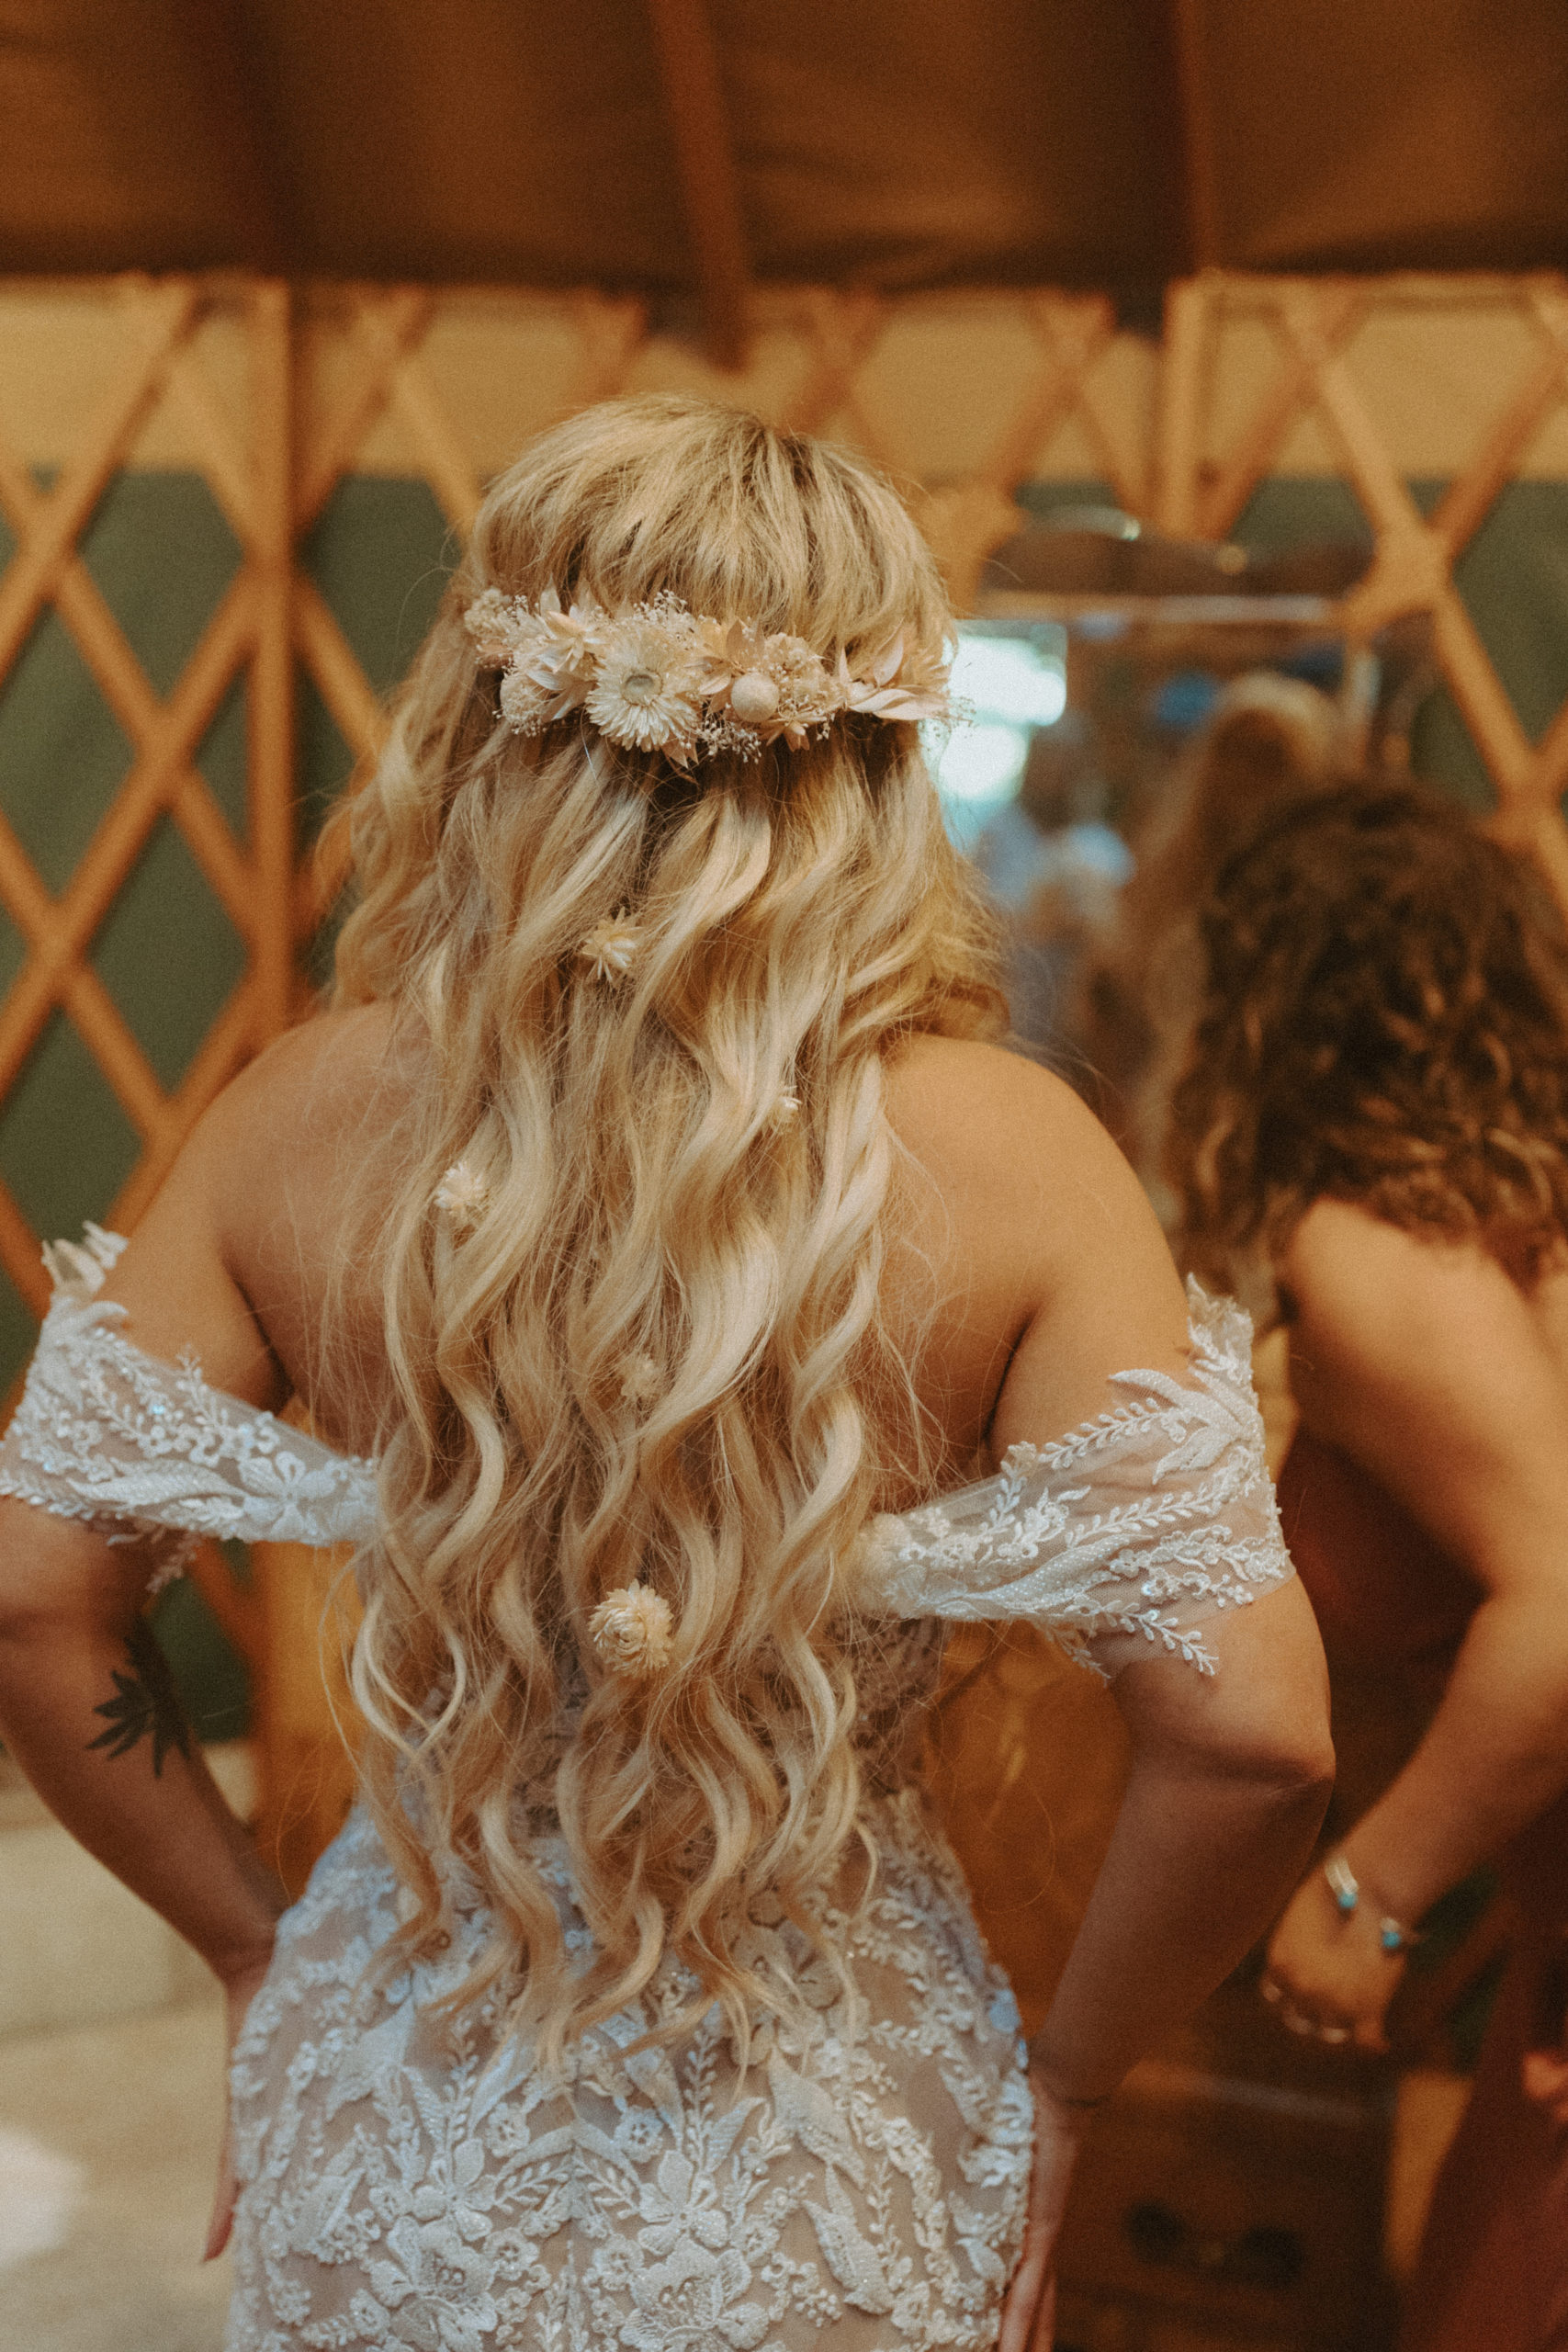 the bride's hair